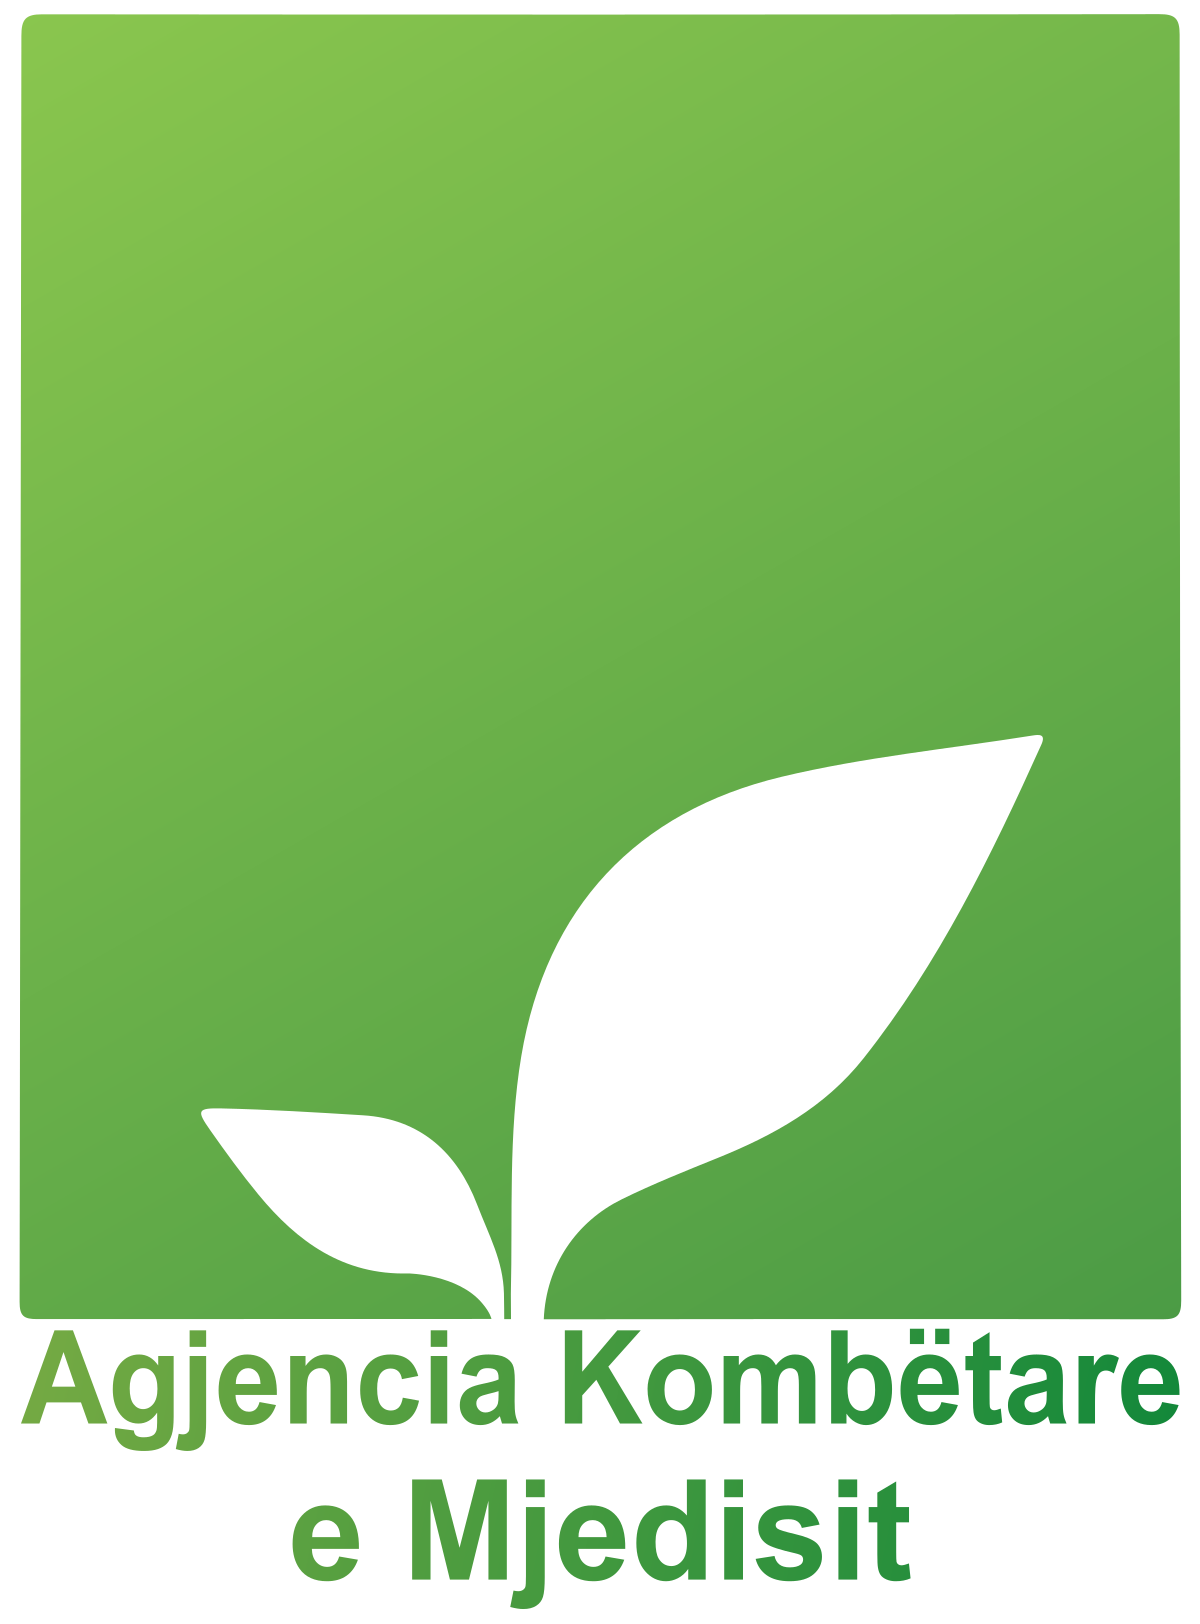 National agency albania wikipedia. Planting clipart human environment interaction